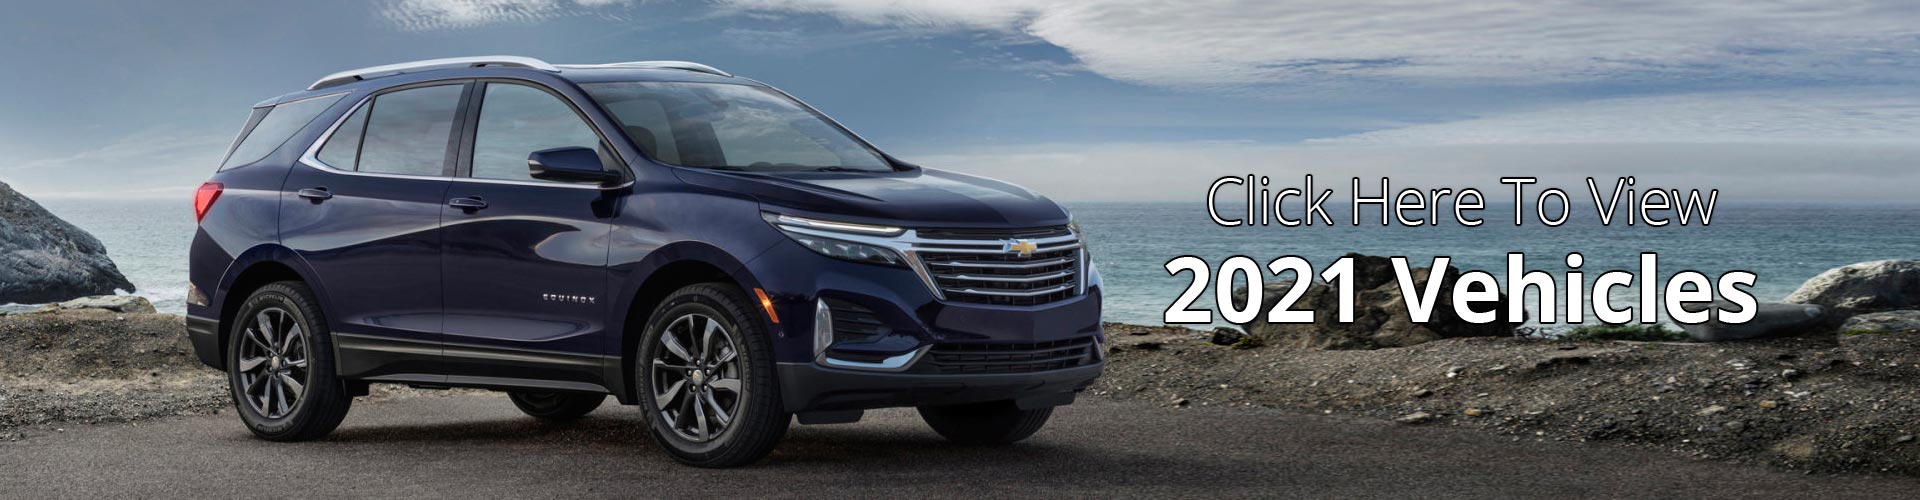 2021 New Cars, Trucks, Vans & SUVs - Vannoy Chevrolet